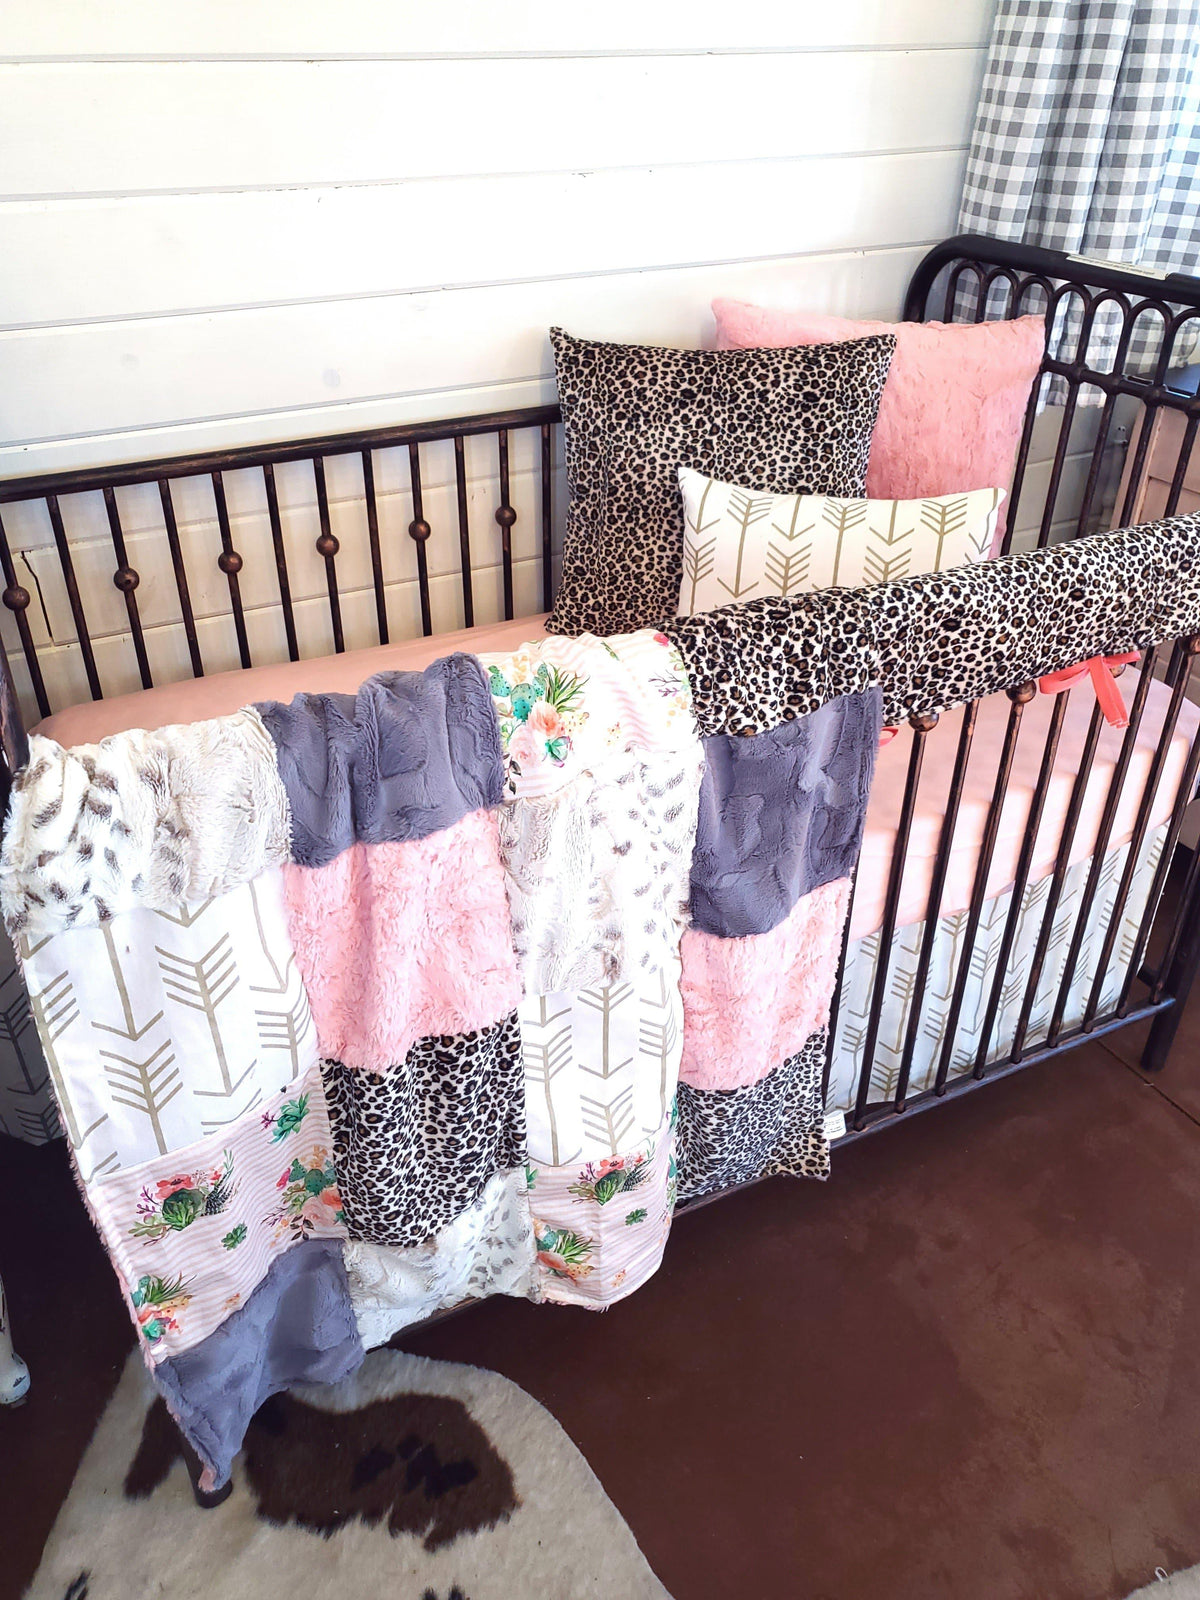 Custom Girl Crib Bedding - Cactus Stripe and Cheetah Baby Bedding Nursery Collection - DBC Baby Bedding Co 